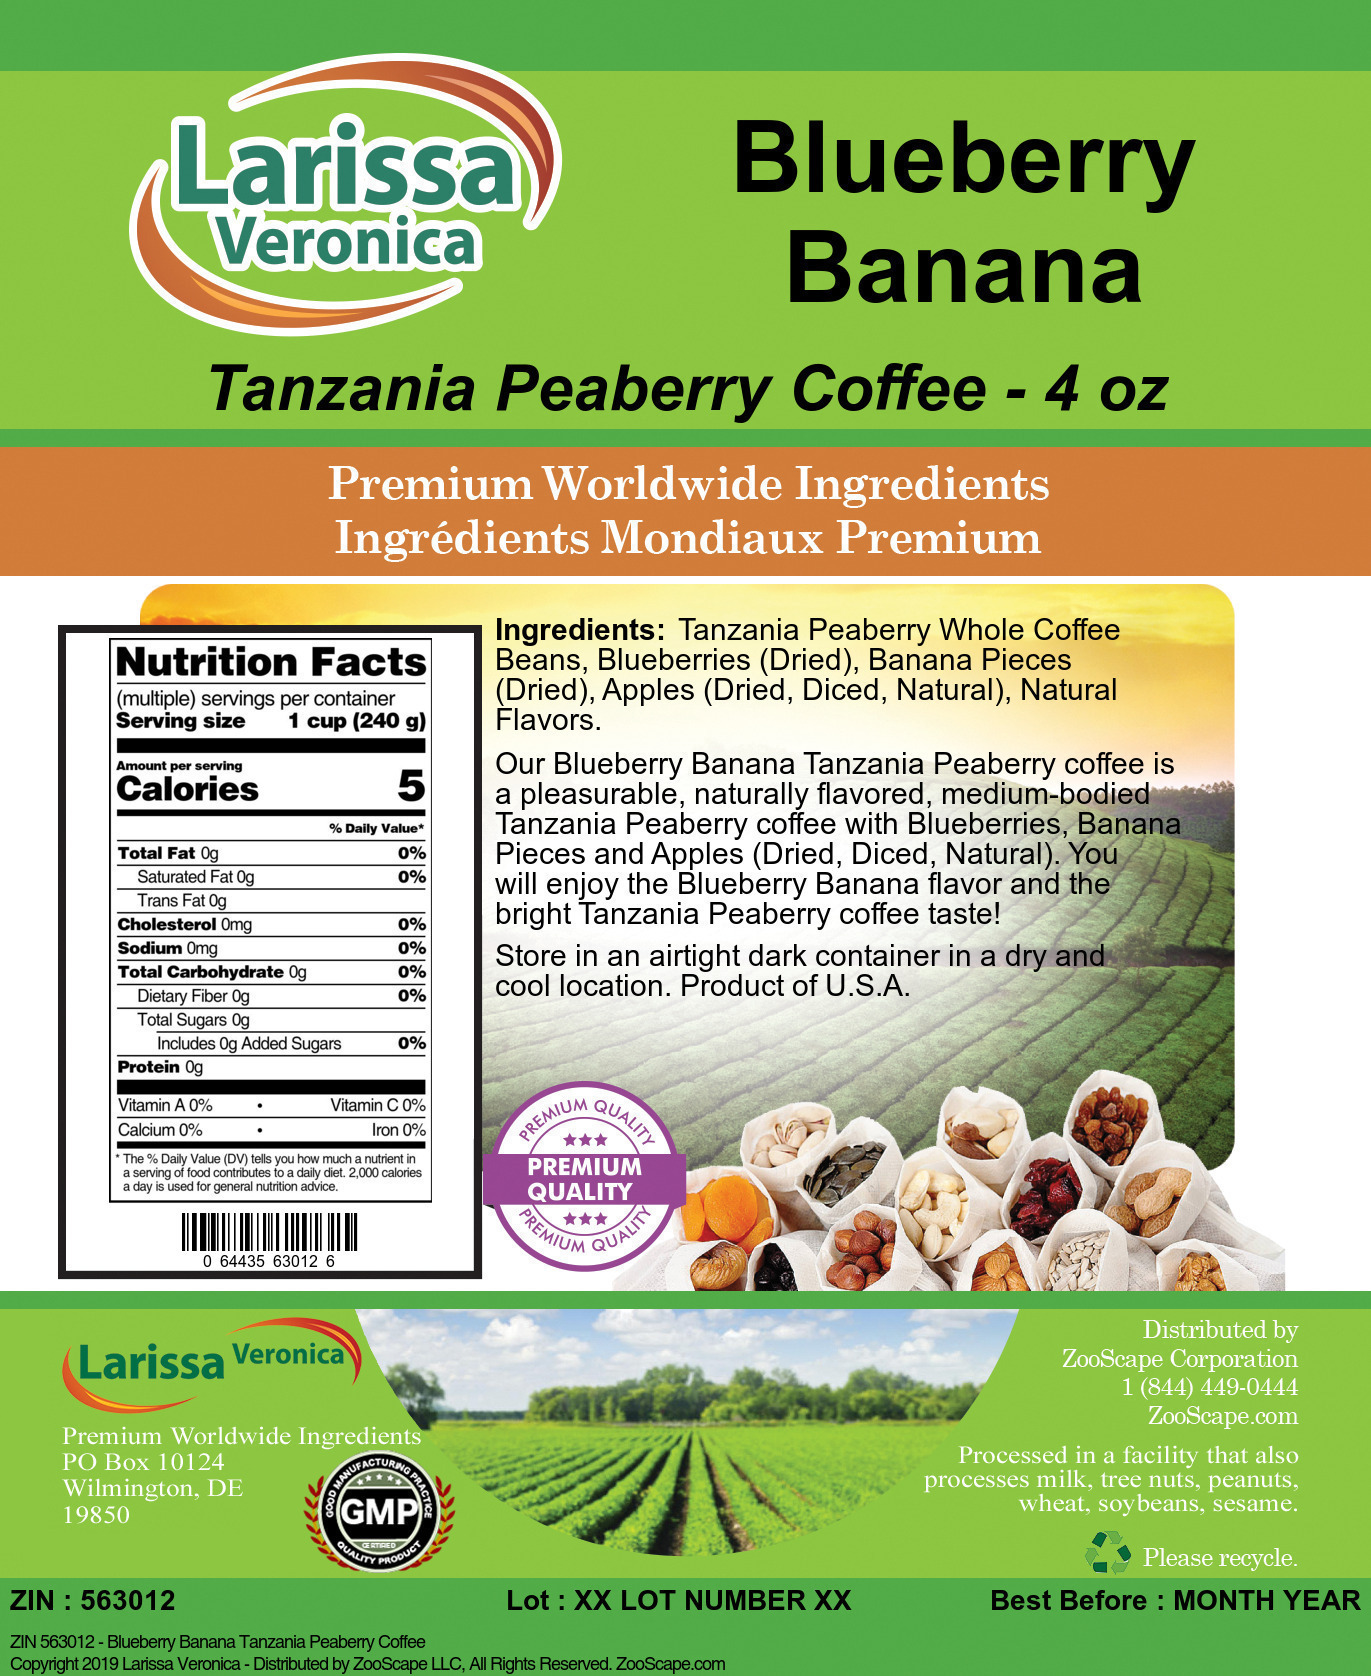 Blueberry Banana Tanzania Peaberry Coffee - Label